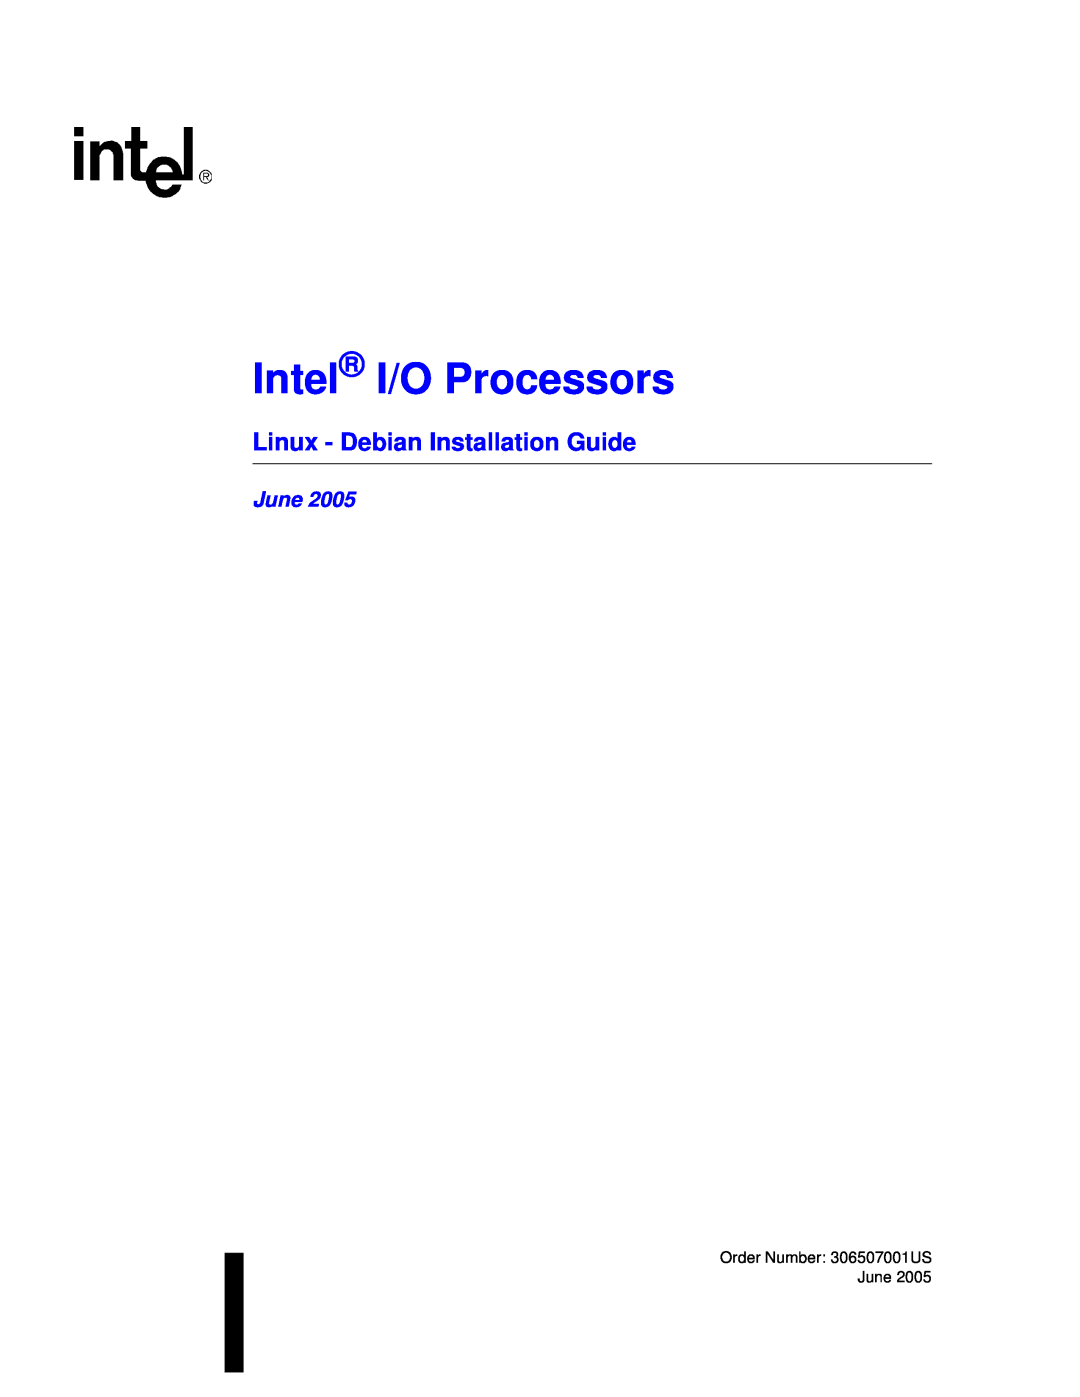 Intel manual Linux - Debian Installation Guide, Intel I/O Processors, Order Number: 306507001US June 